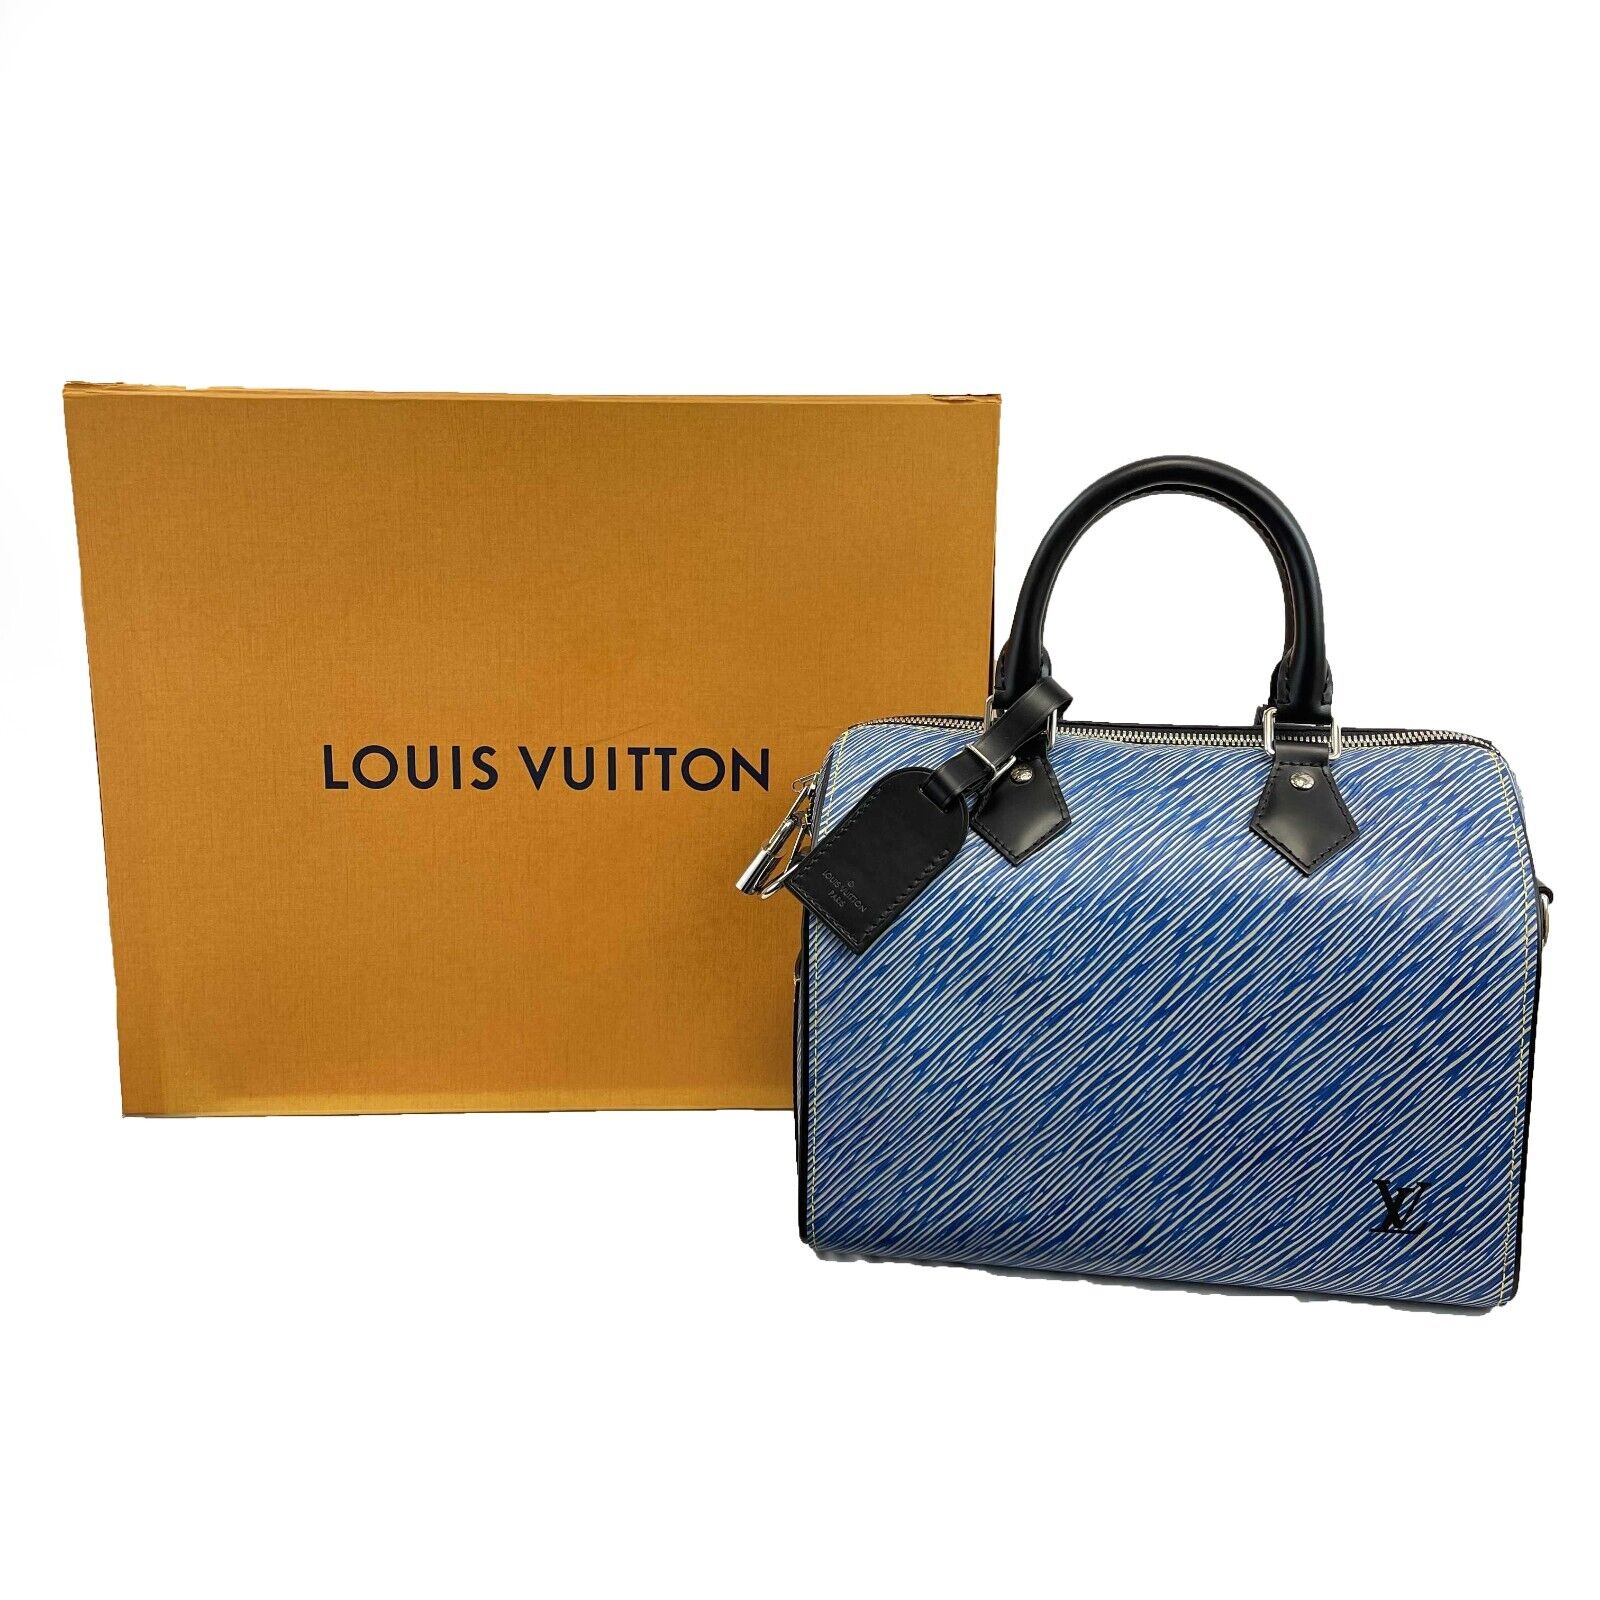 Louis Vuitton - Speedy Bandouliere - Blue Top Handle w/ Strap